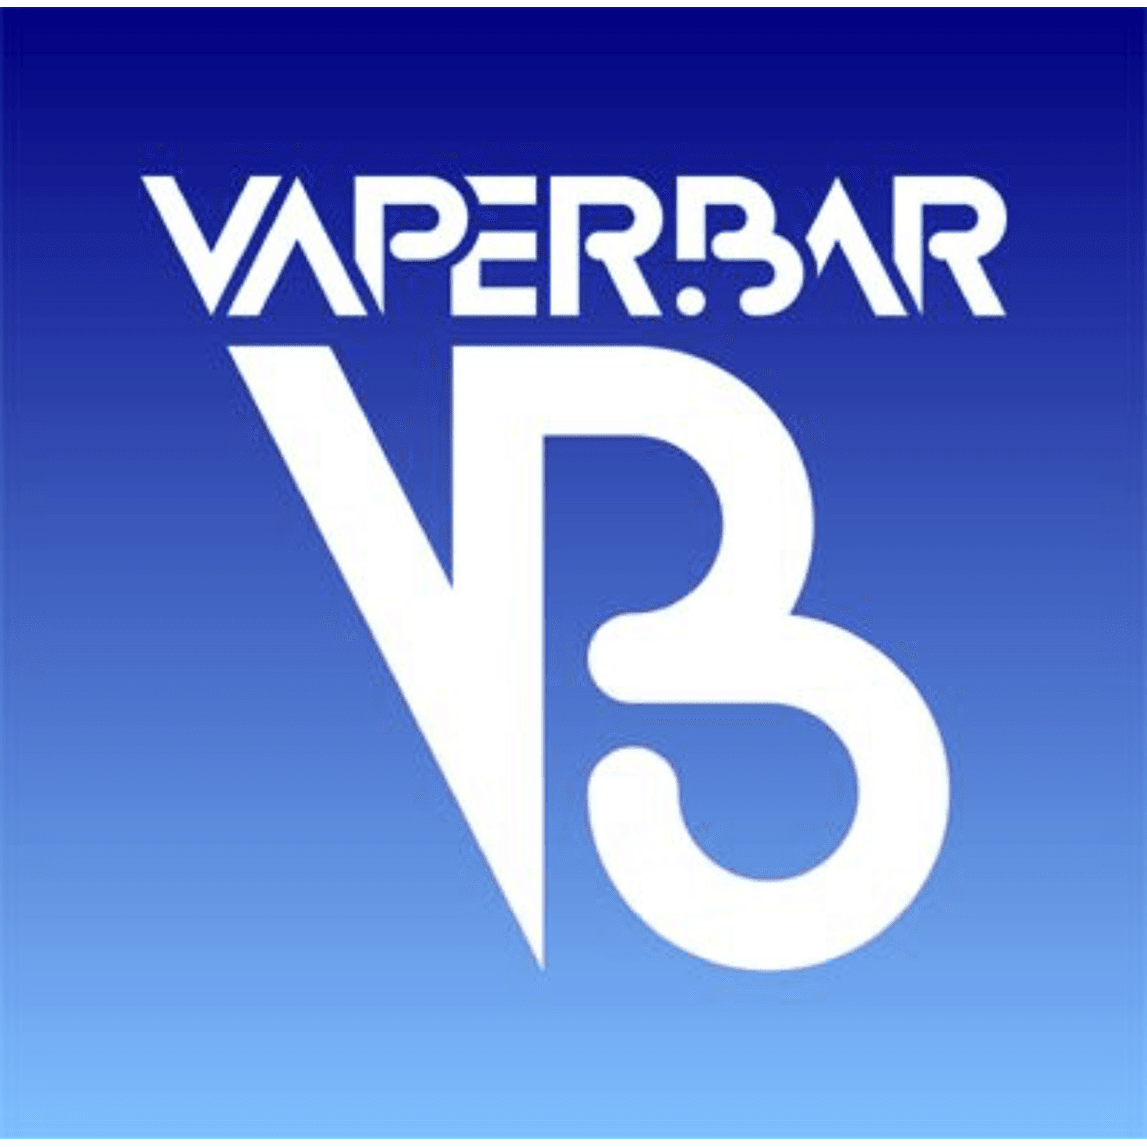 VaperBar Logo